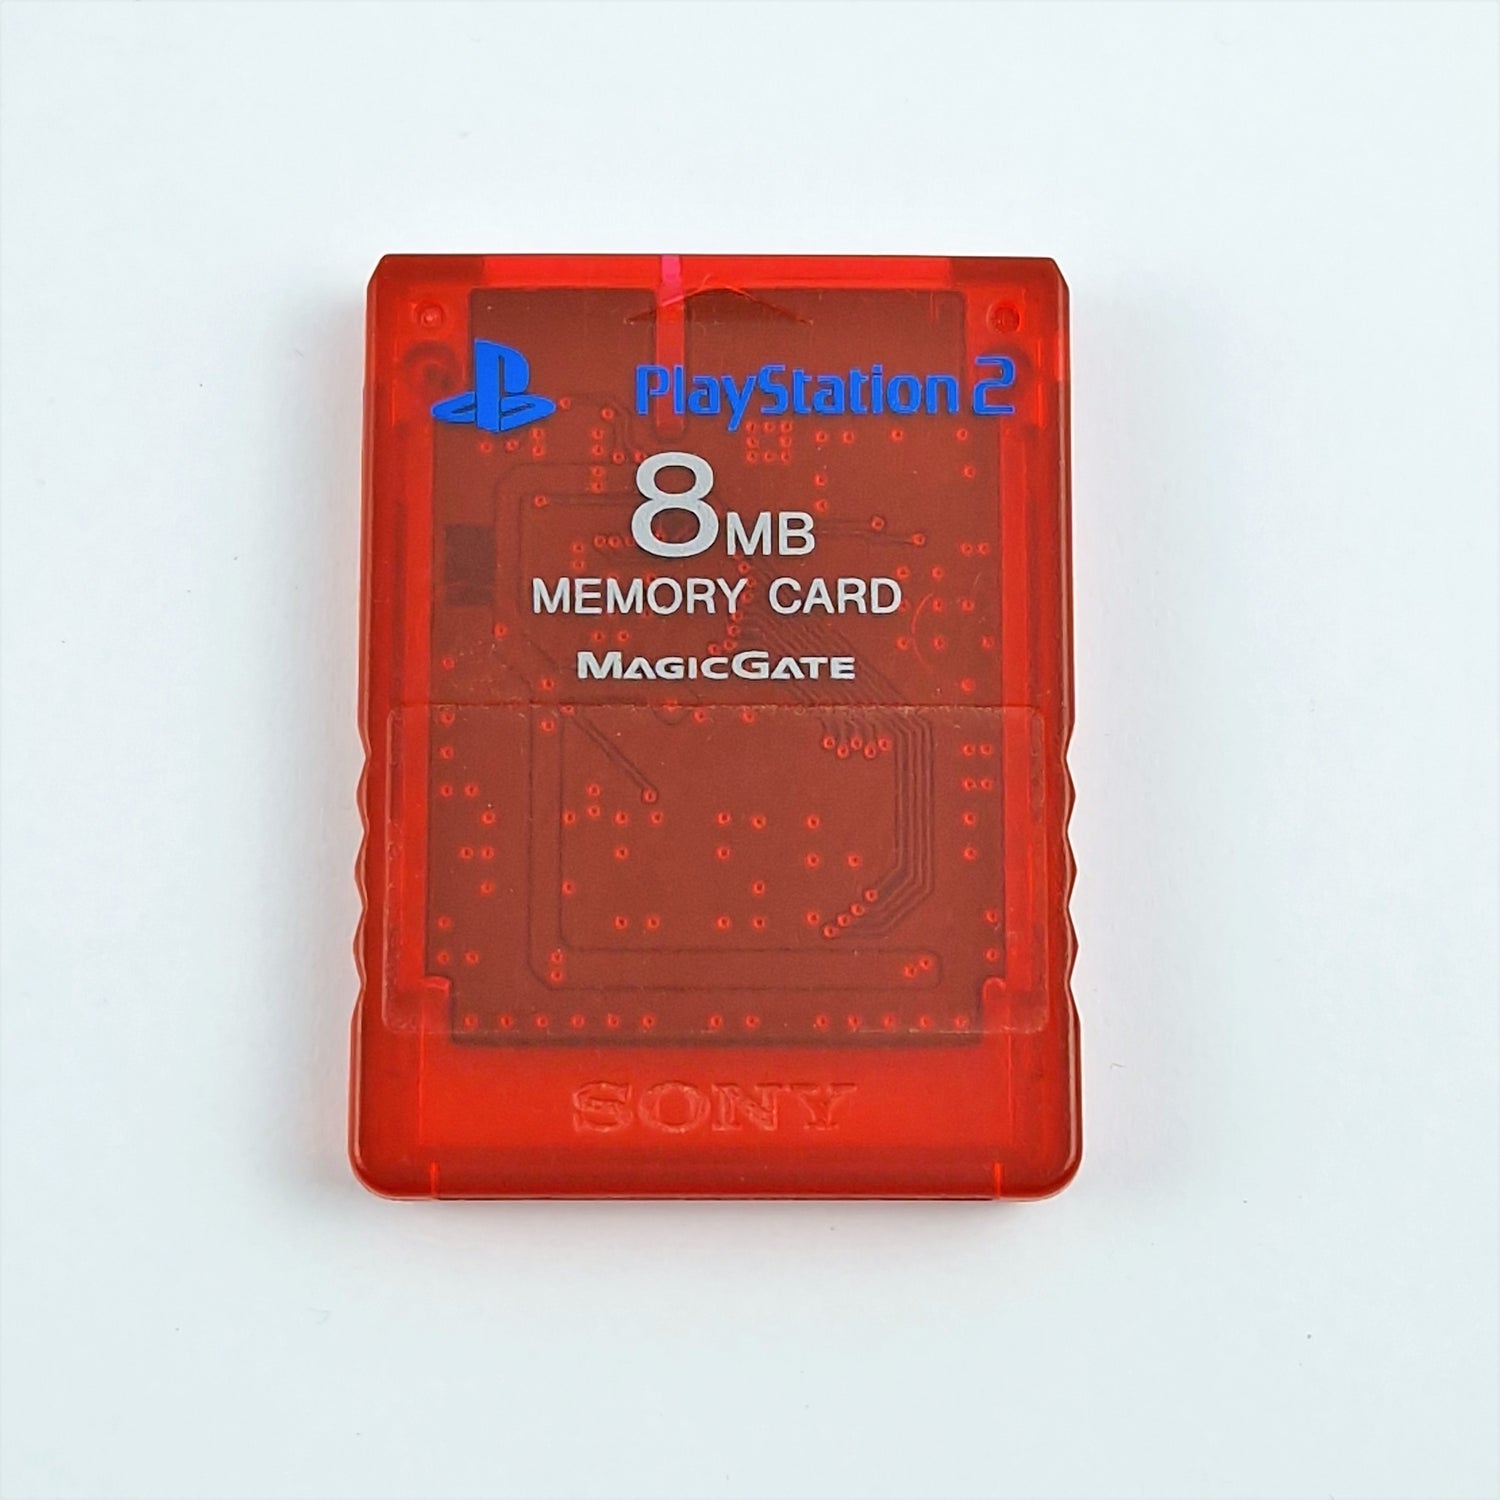 Sony Playstation 2 Memory Card: Original Memory Card Transparent Red 8mb